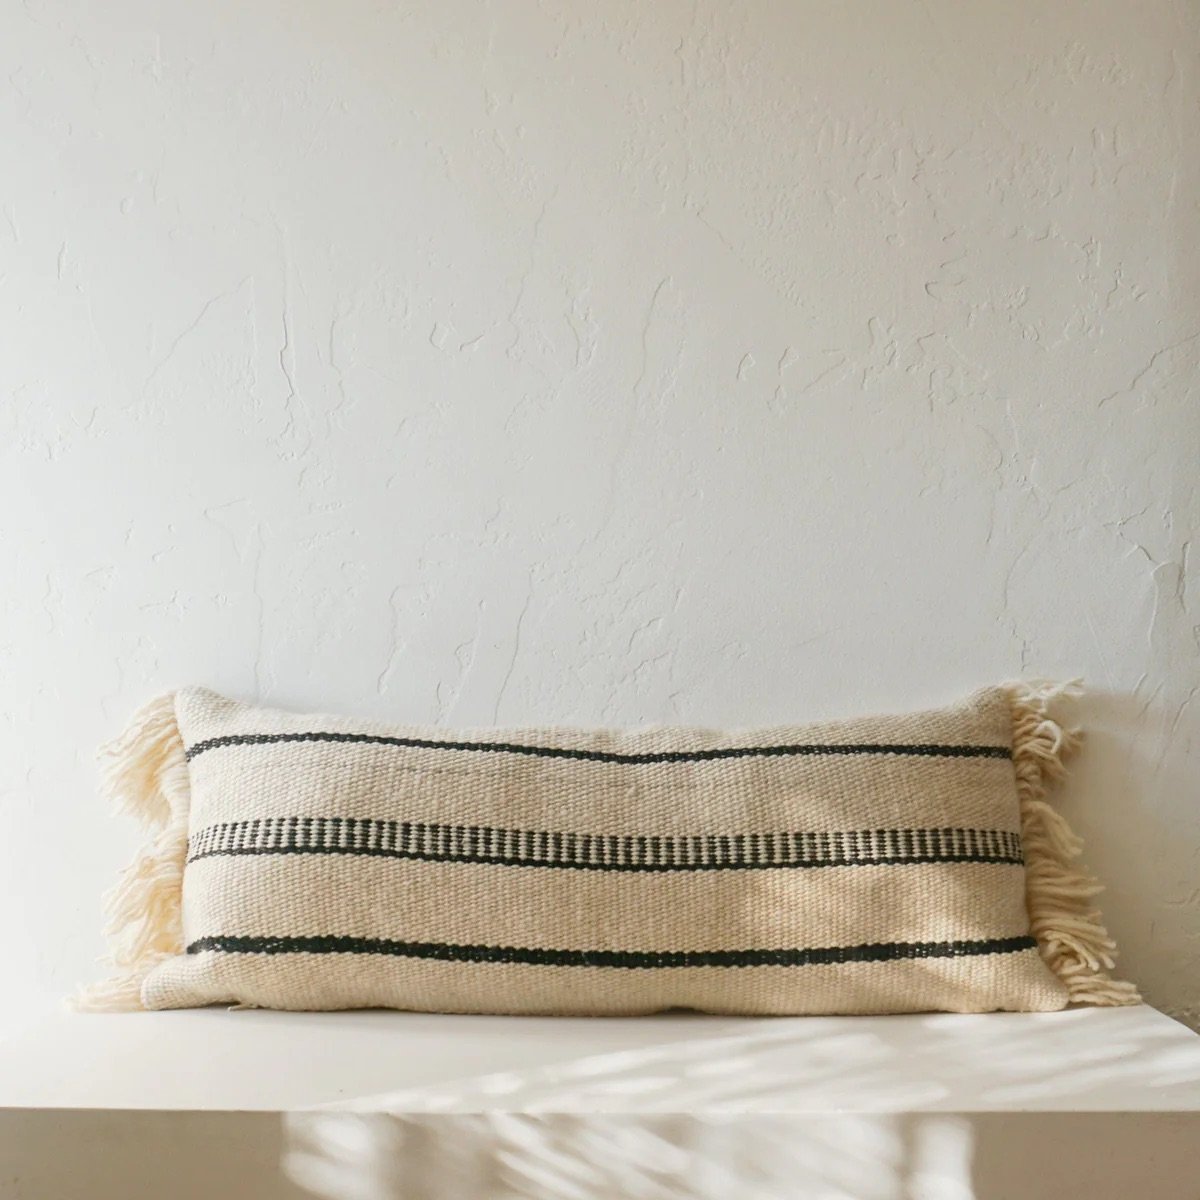 treko-pillows-makun-collection-white-black-multi-stripes-pillow-14-x-35-by-treko-38843774304511.jpeg